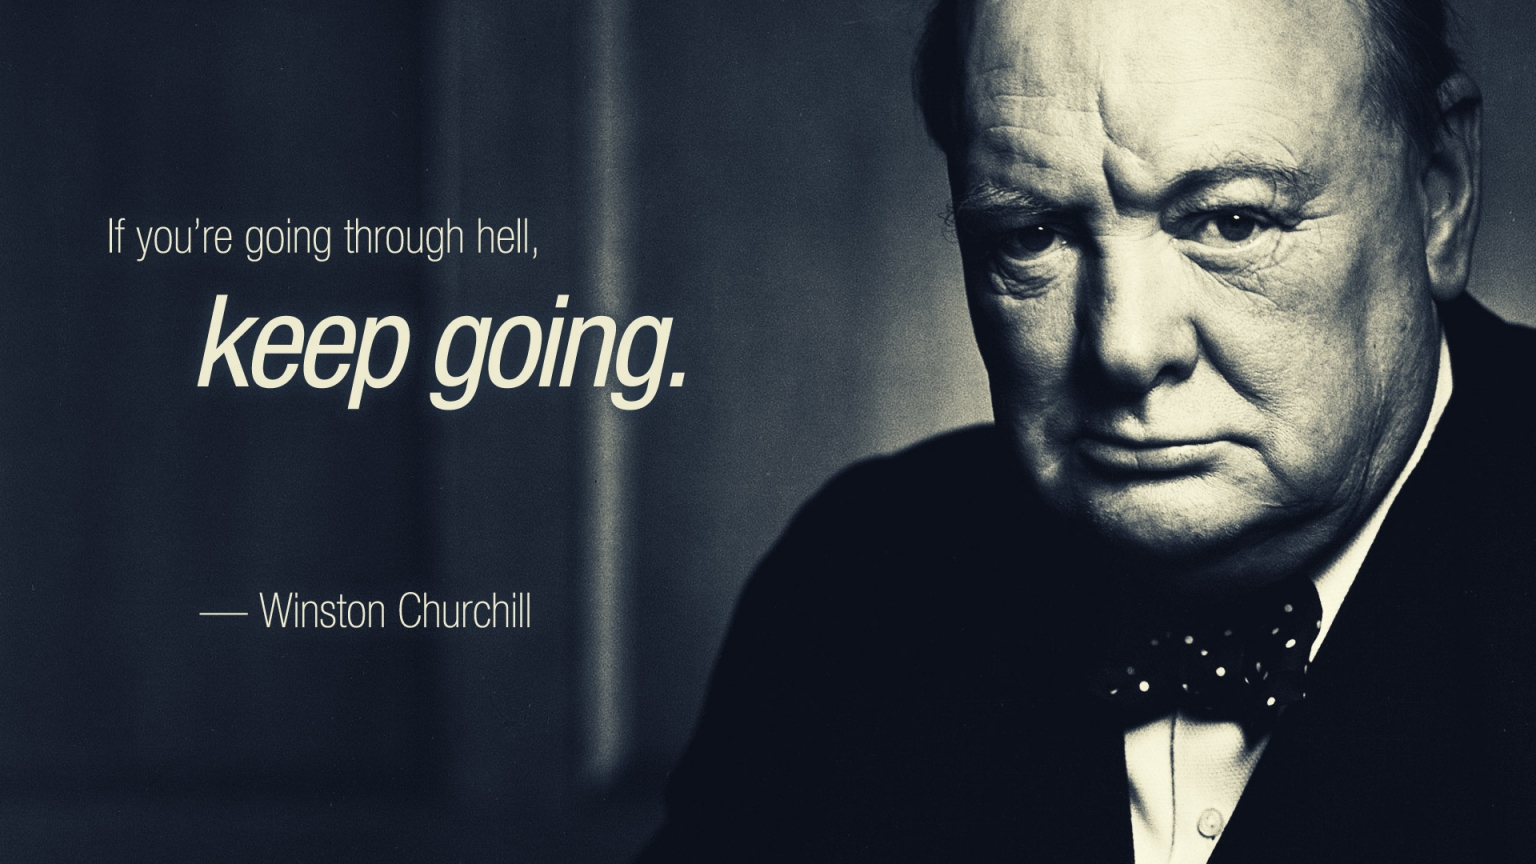 Winston Churchill Quote for 1536 x 864 HDTV resolution